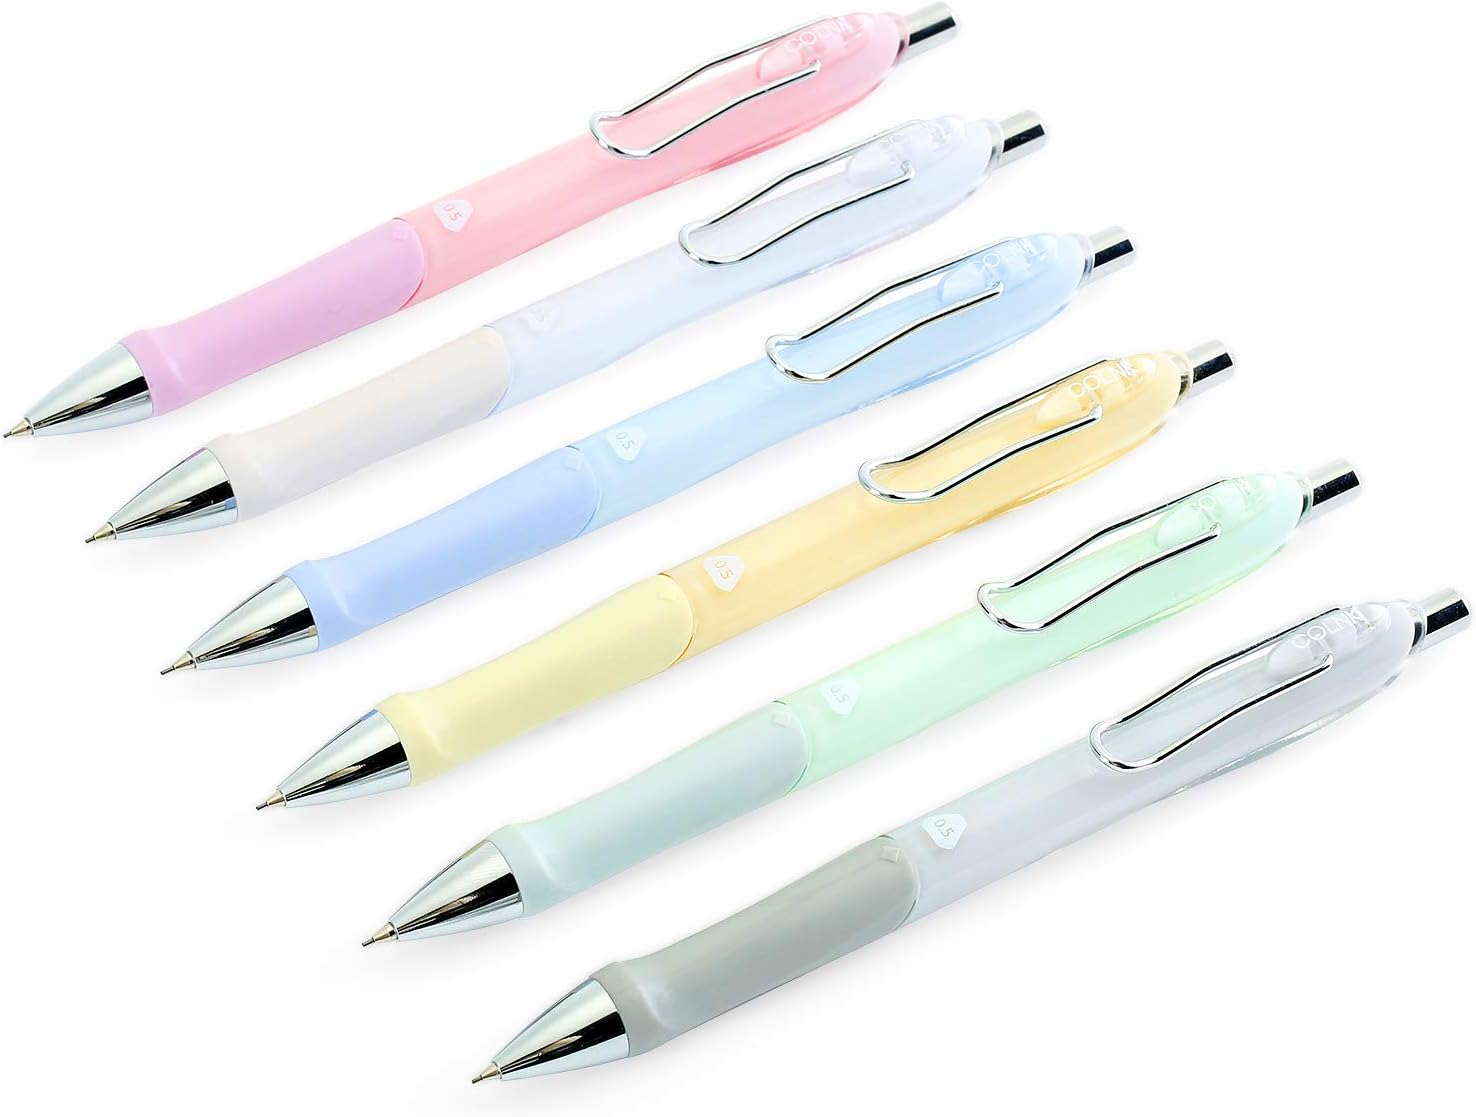  Professional Eraser Drawing Pencil Set, 6pc Eraser